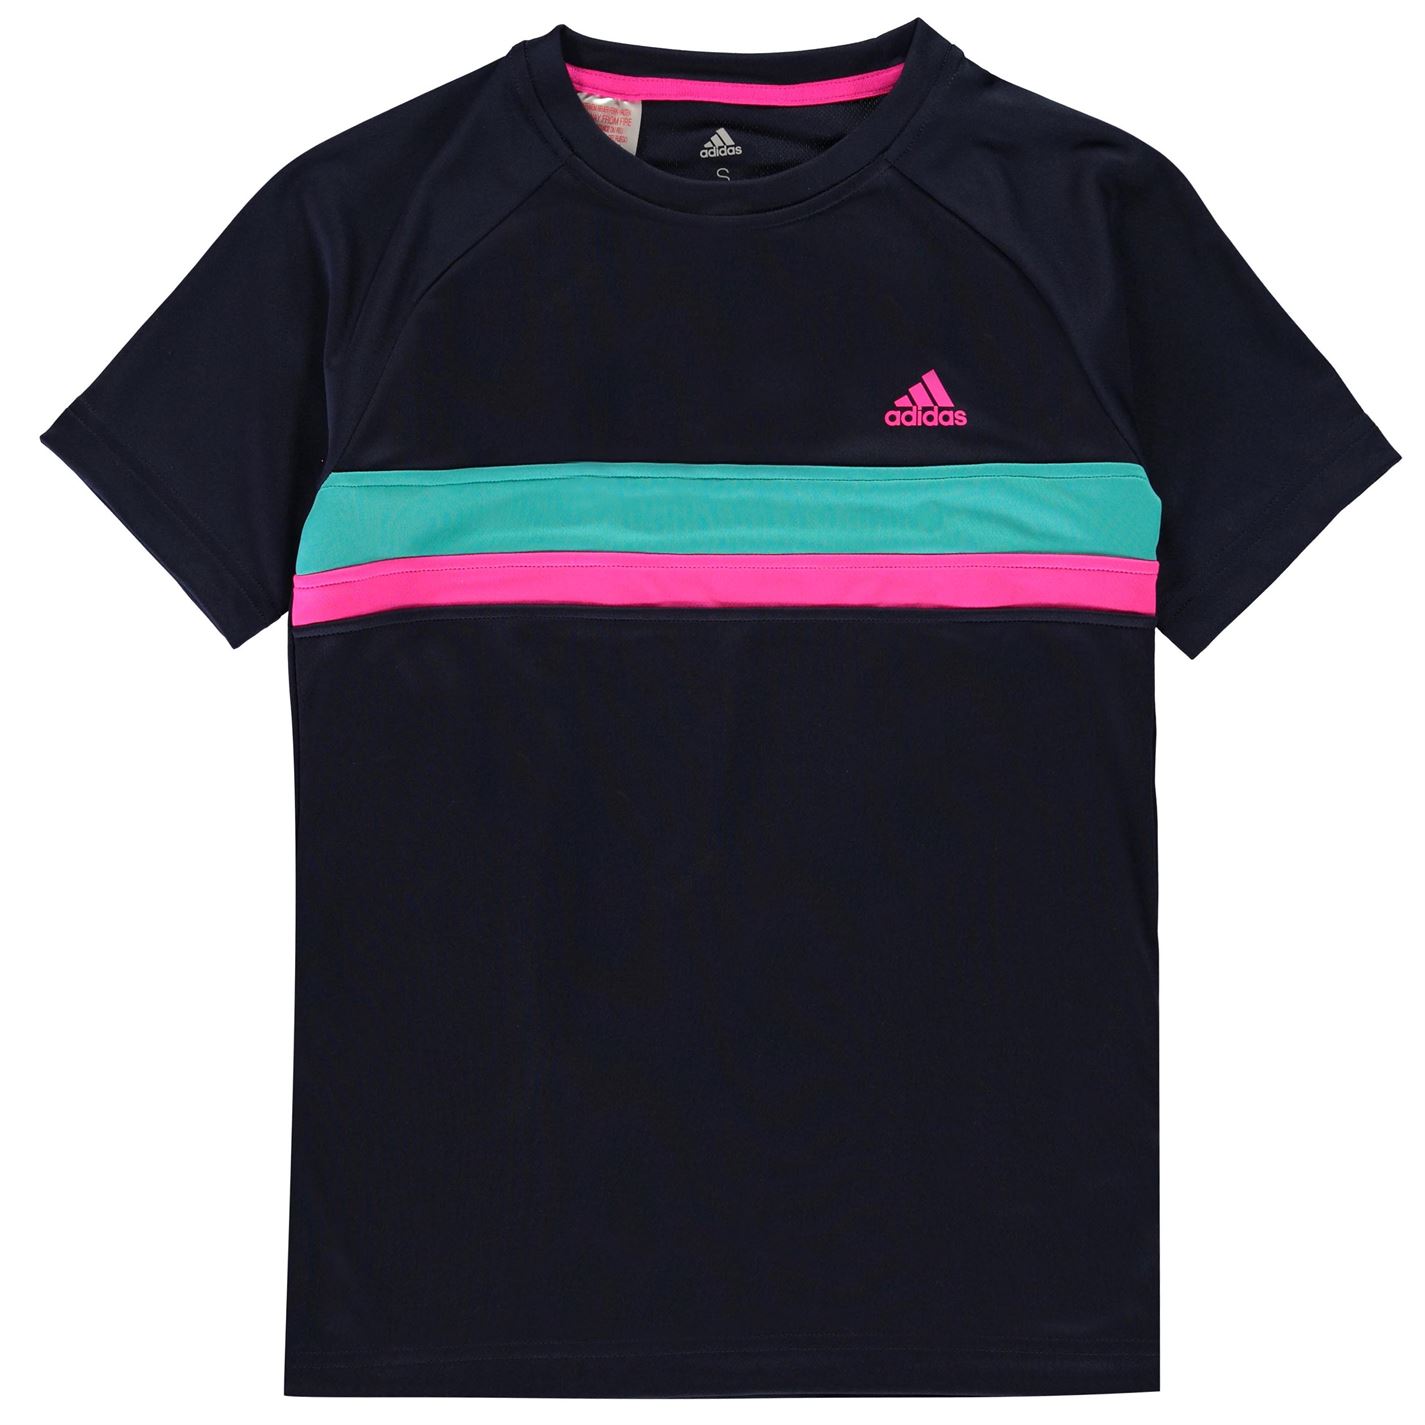 Adidas Club T Shirt Junior Boys